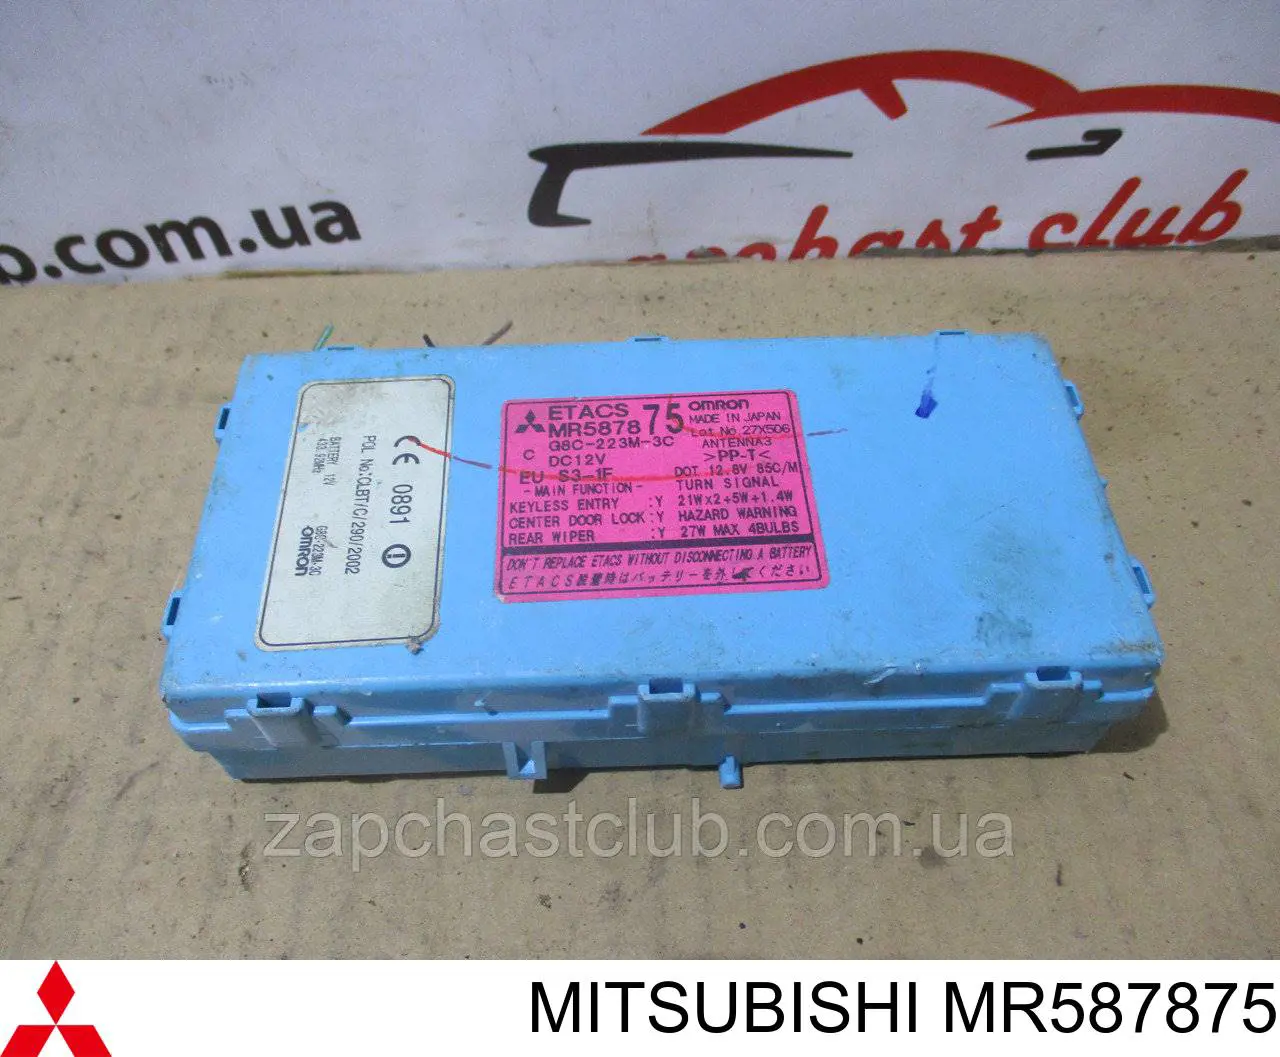 8637A331 Mitsubishi unidade de conforto